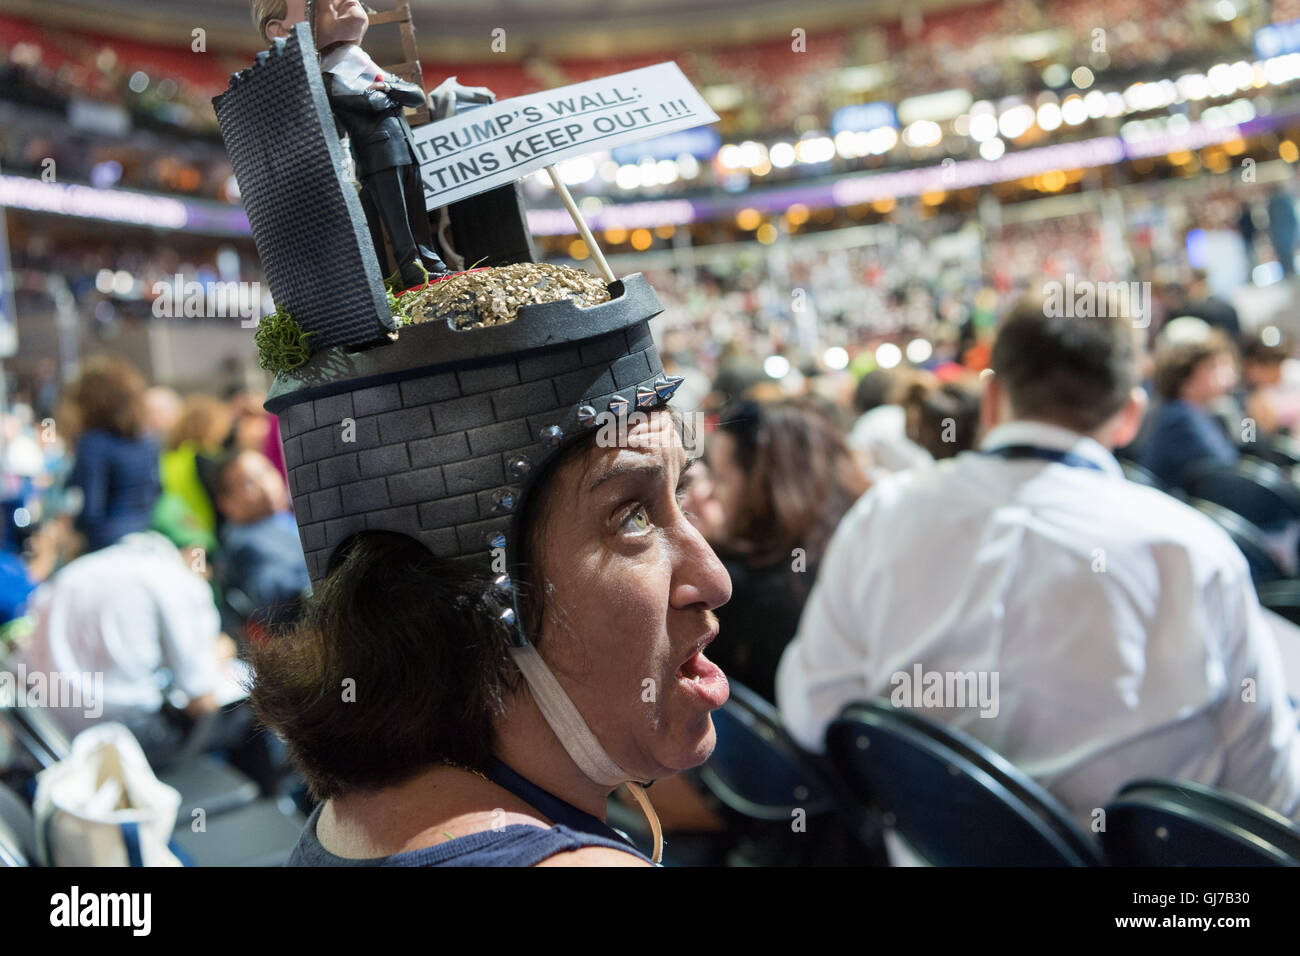 https://c8.alamy.com/comp/GJ7B30/a-democratic-delegate-from-florida-wears-a-anti-trump-hat-before-the-GJ7B30.jpg